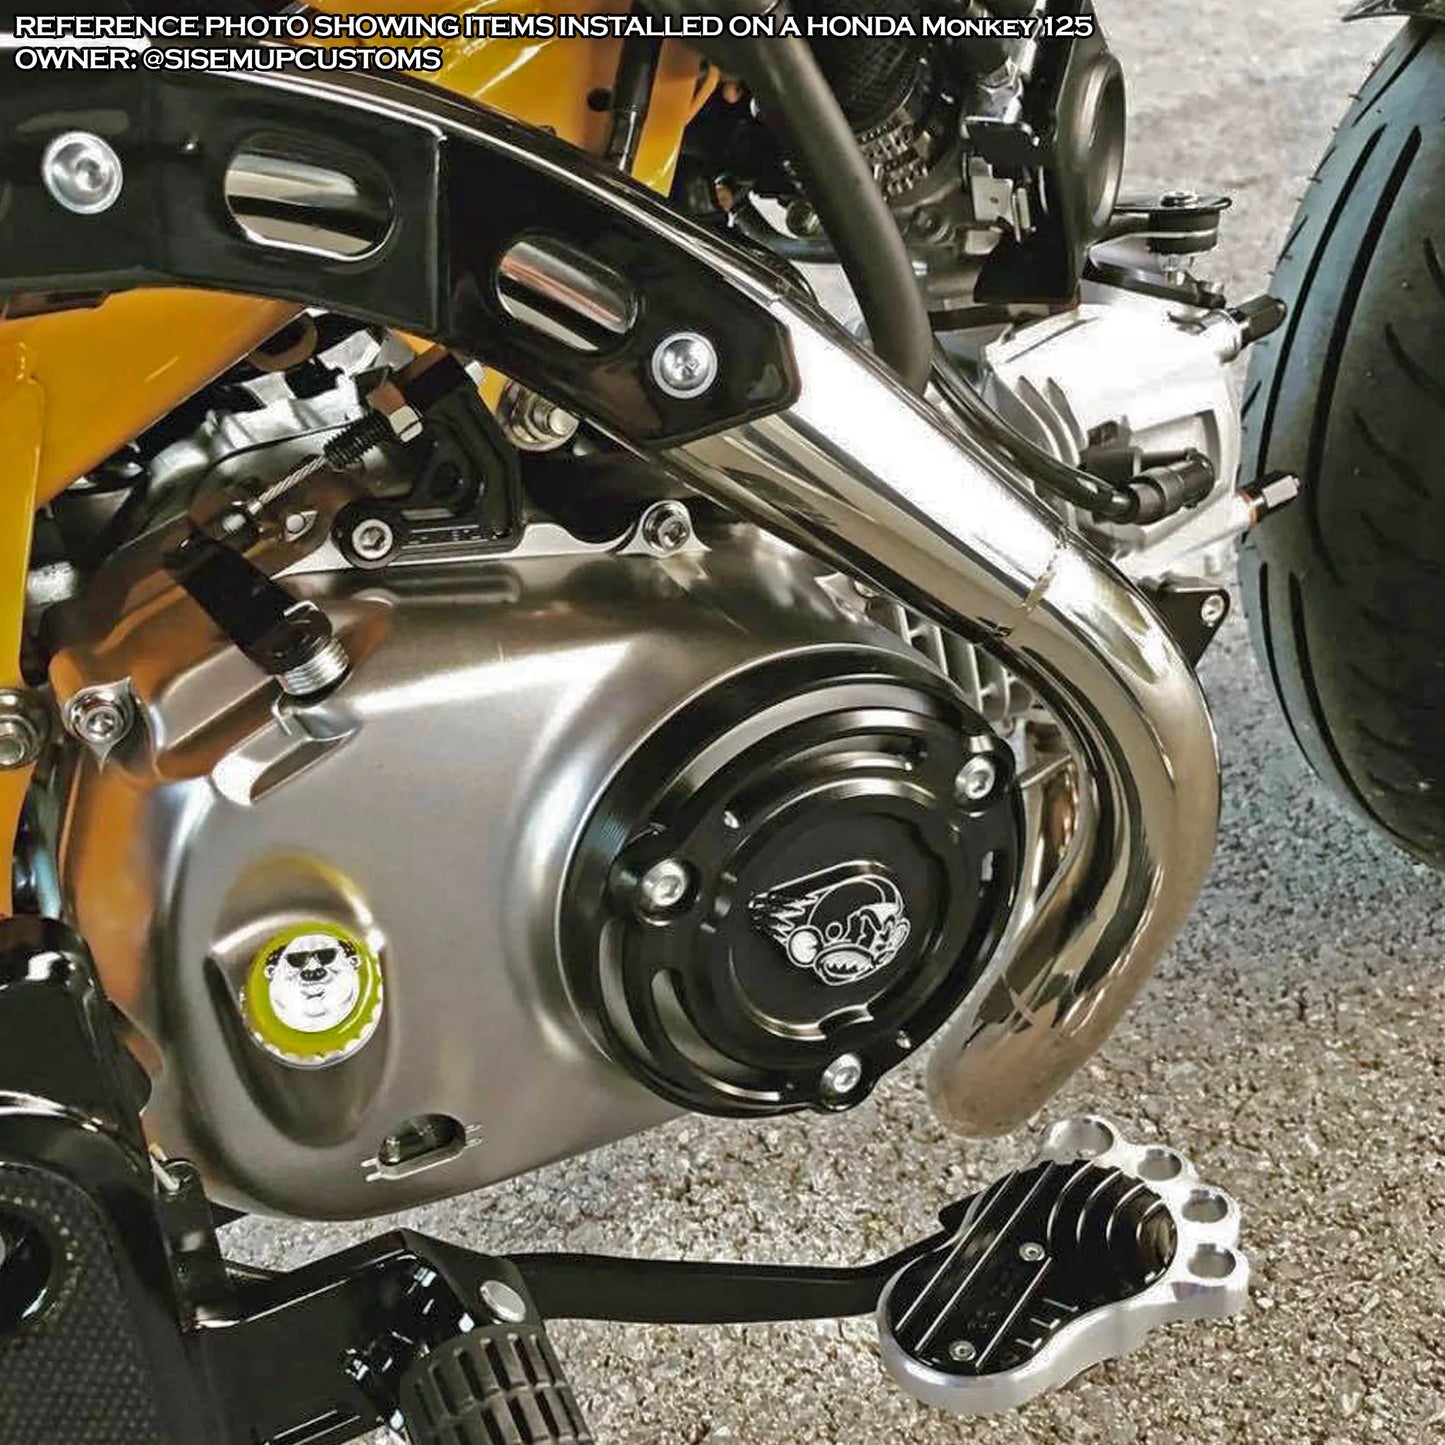 Kitaco Big Foot Rear Brake Pedal Cover - Honda Grom Monkey 125